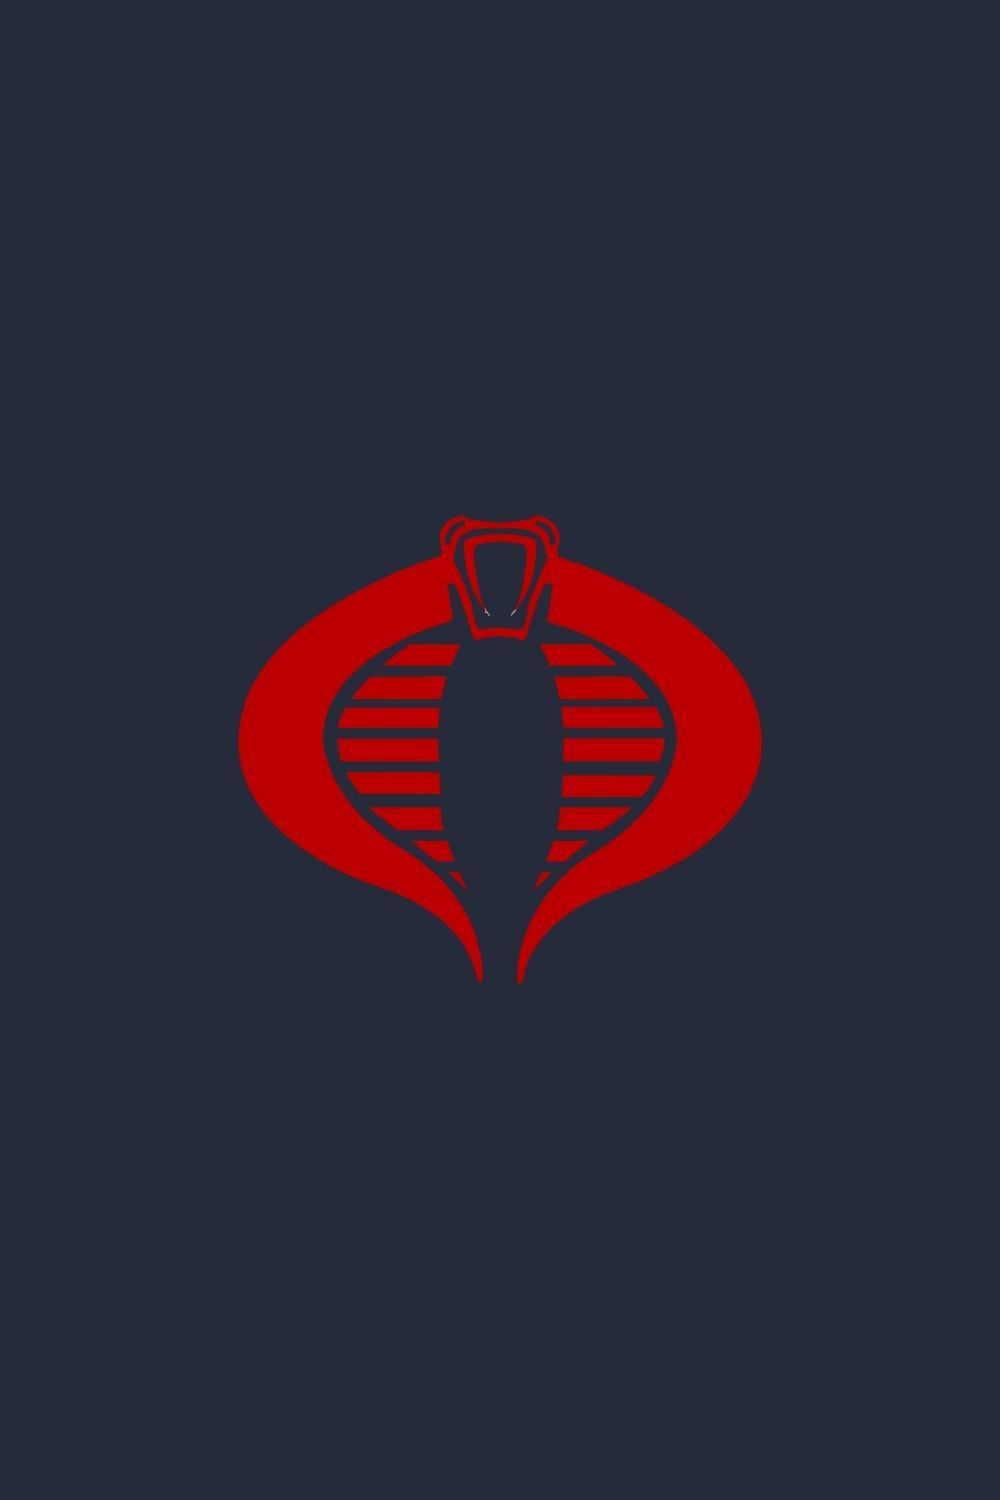 Gi Joe Cobra Enemy Logo. Gi joe, Cobra kunst